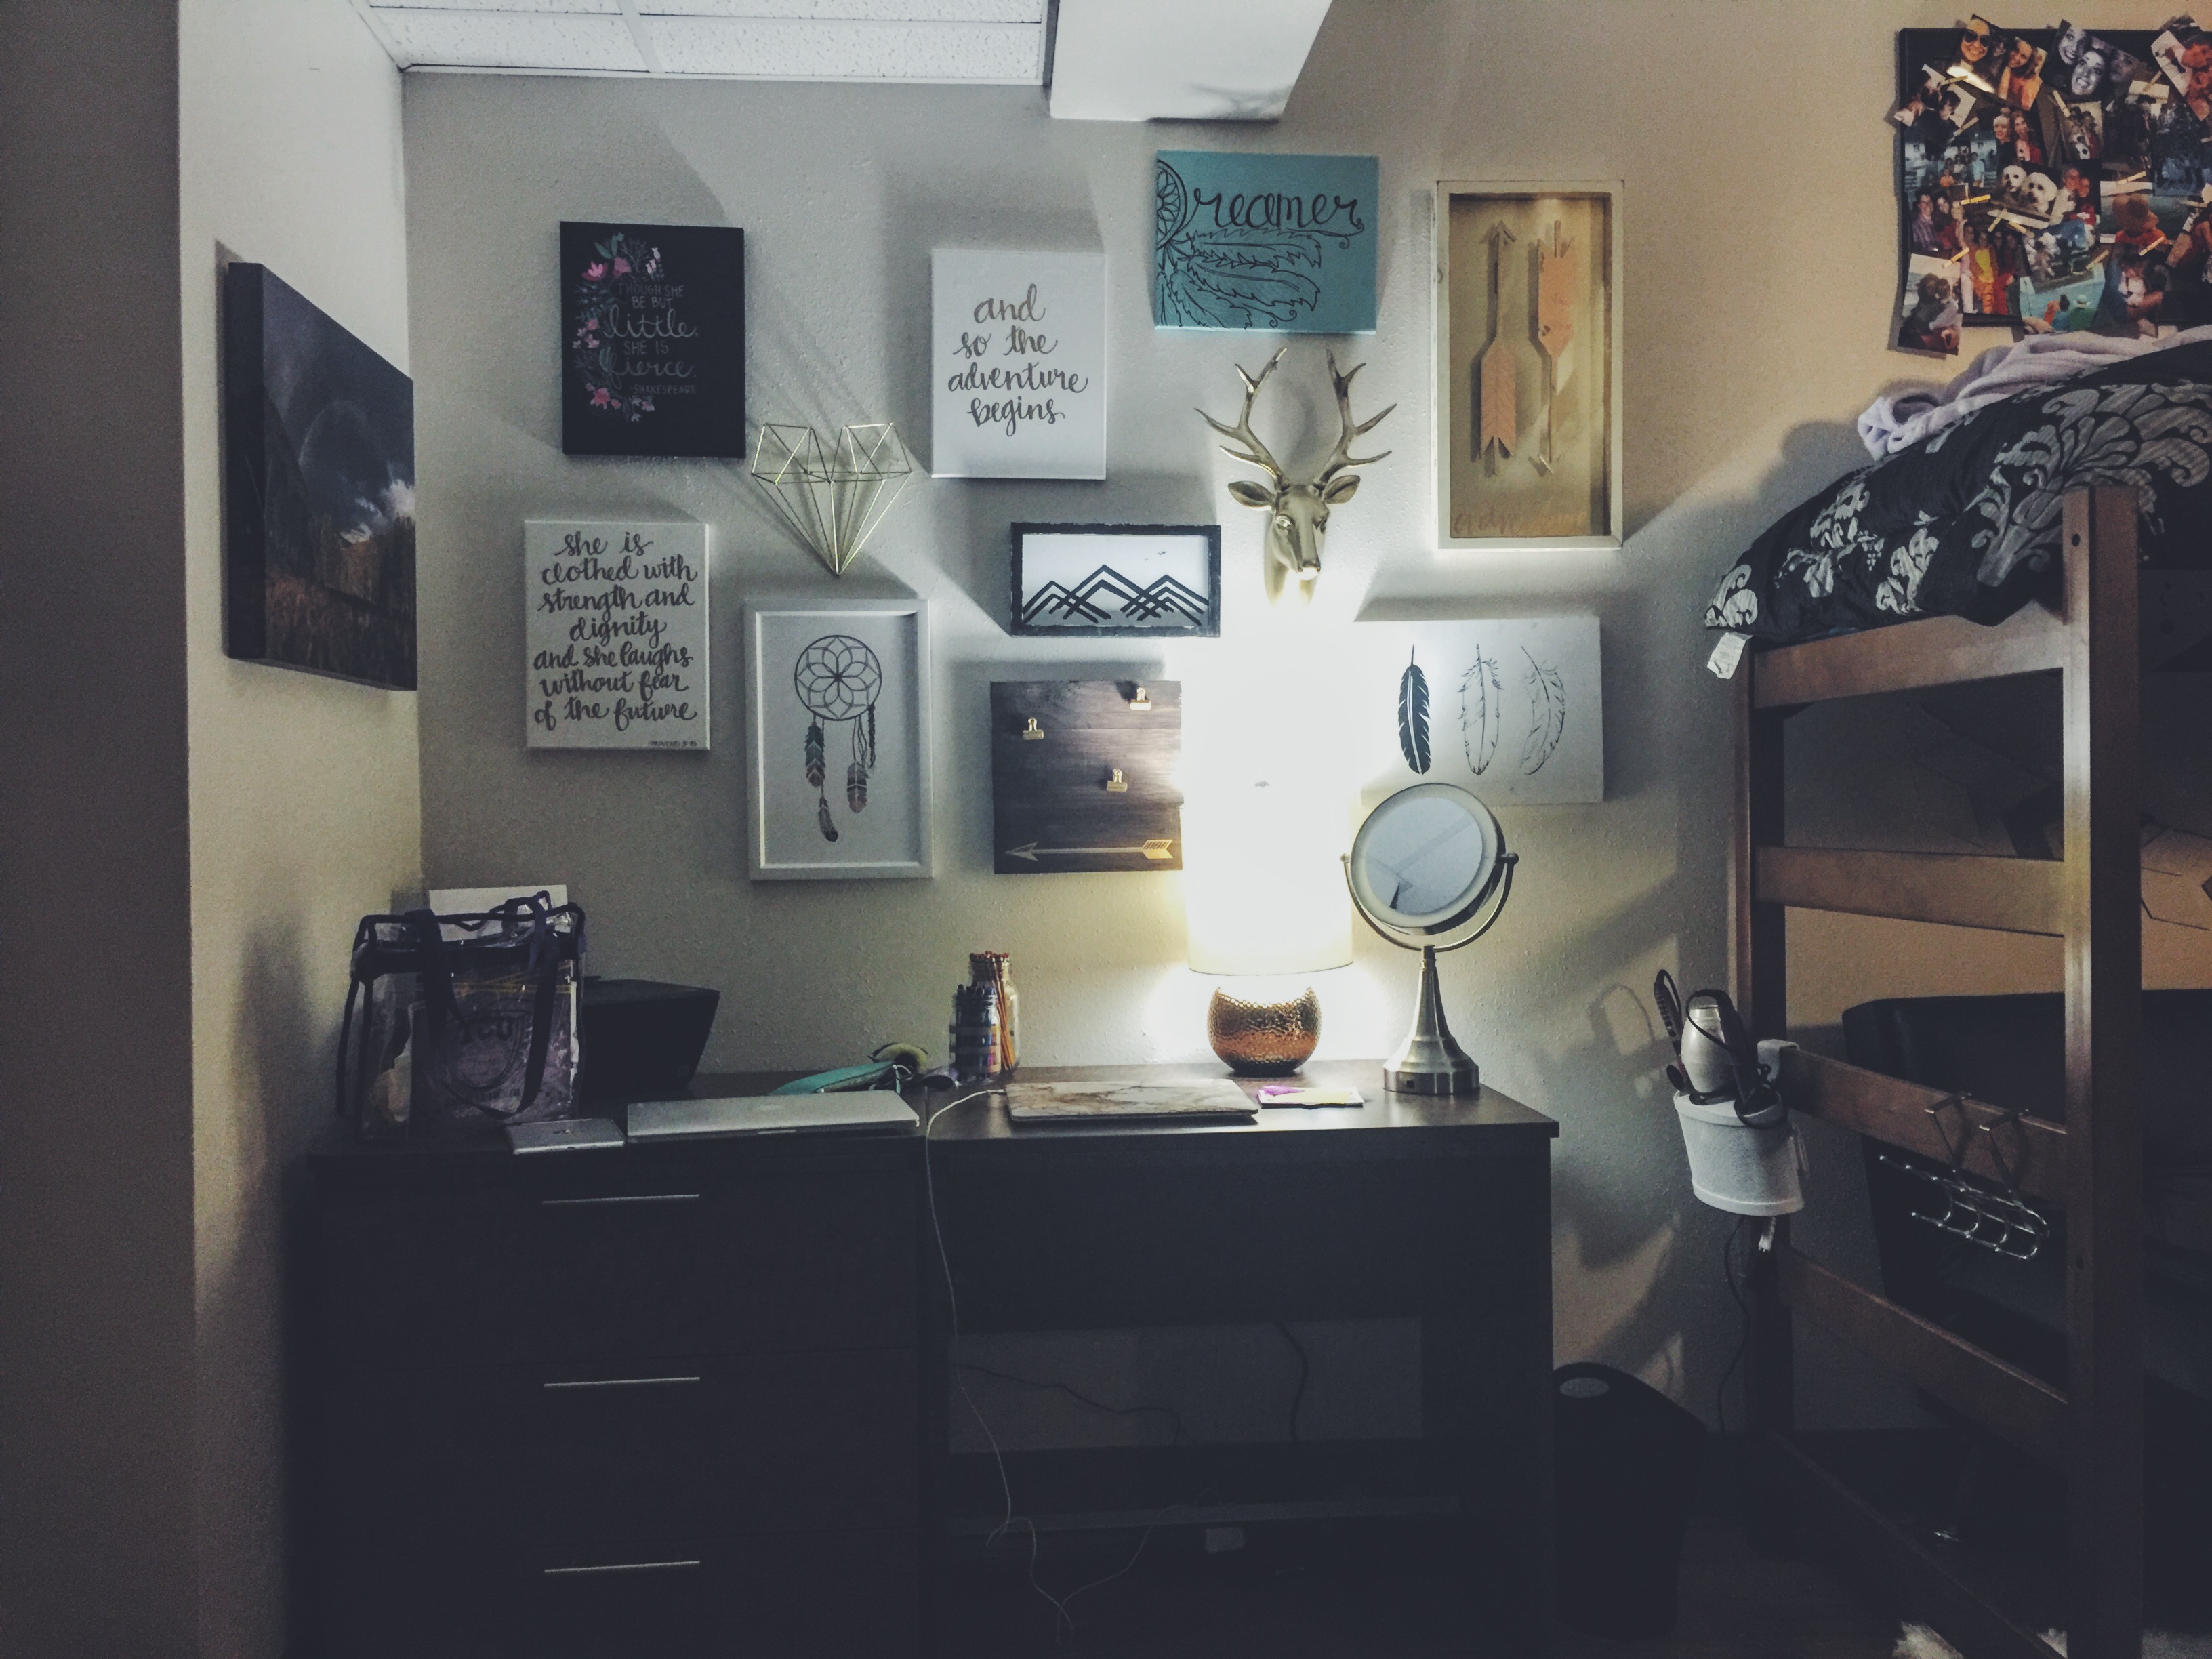 Dorm Room Ideas - Gallery Wall